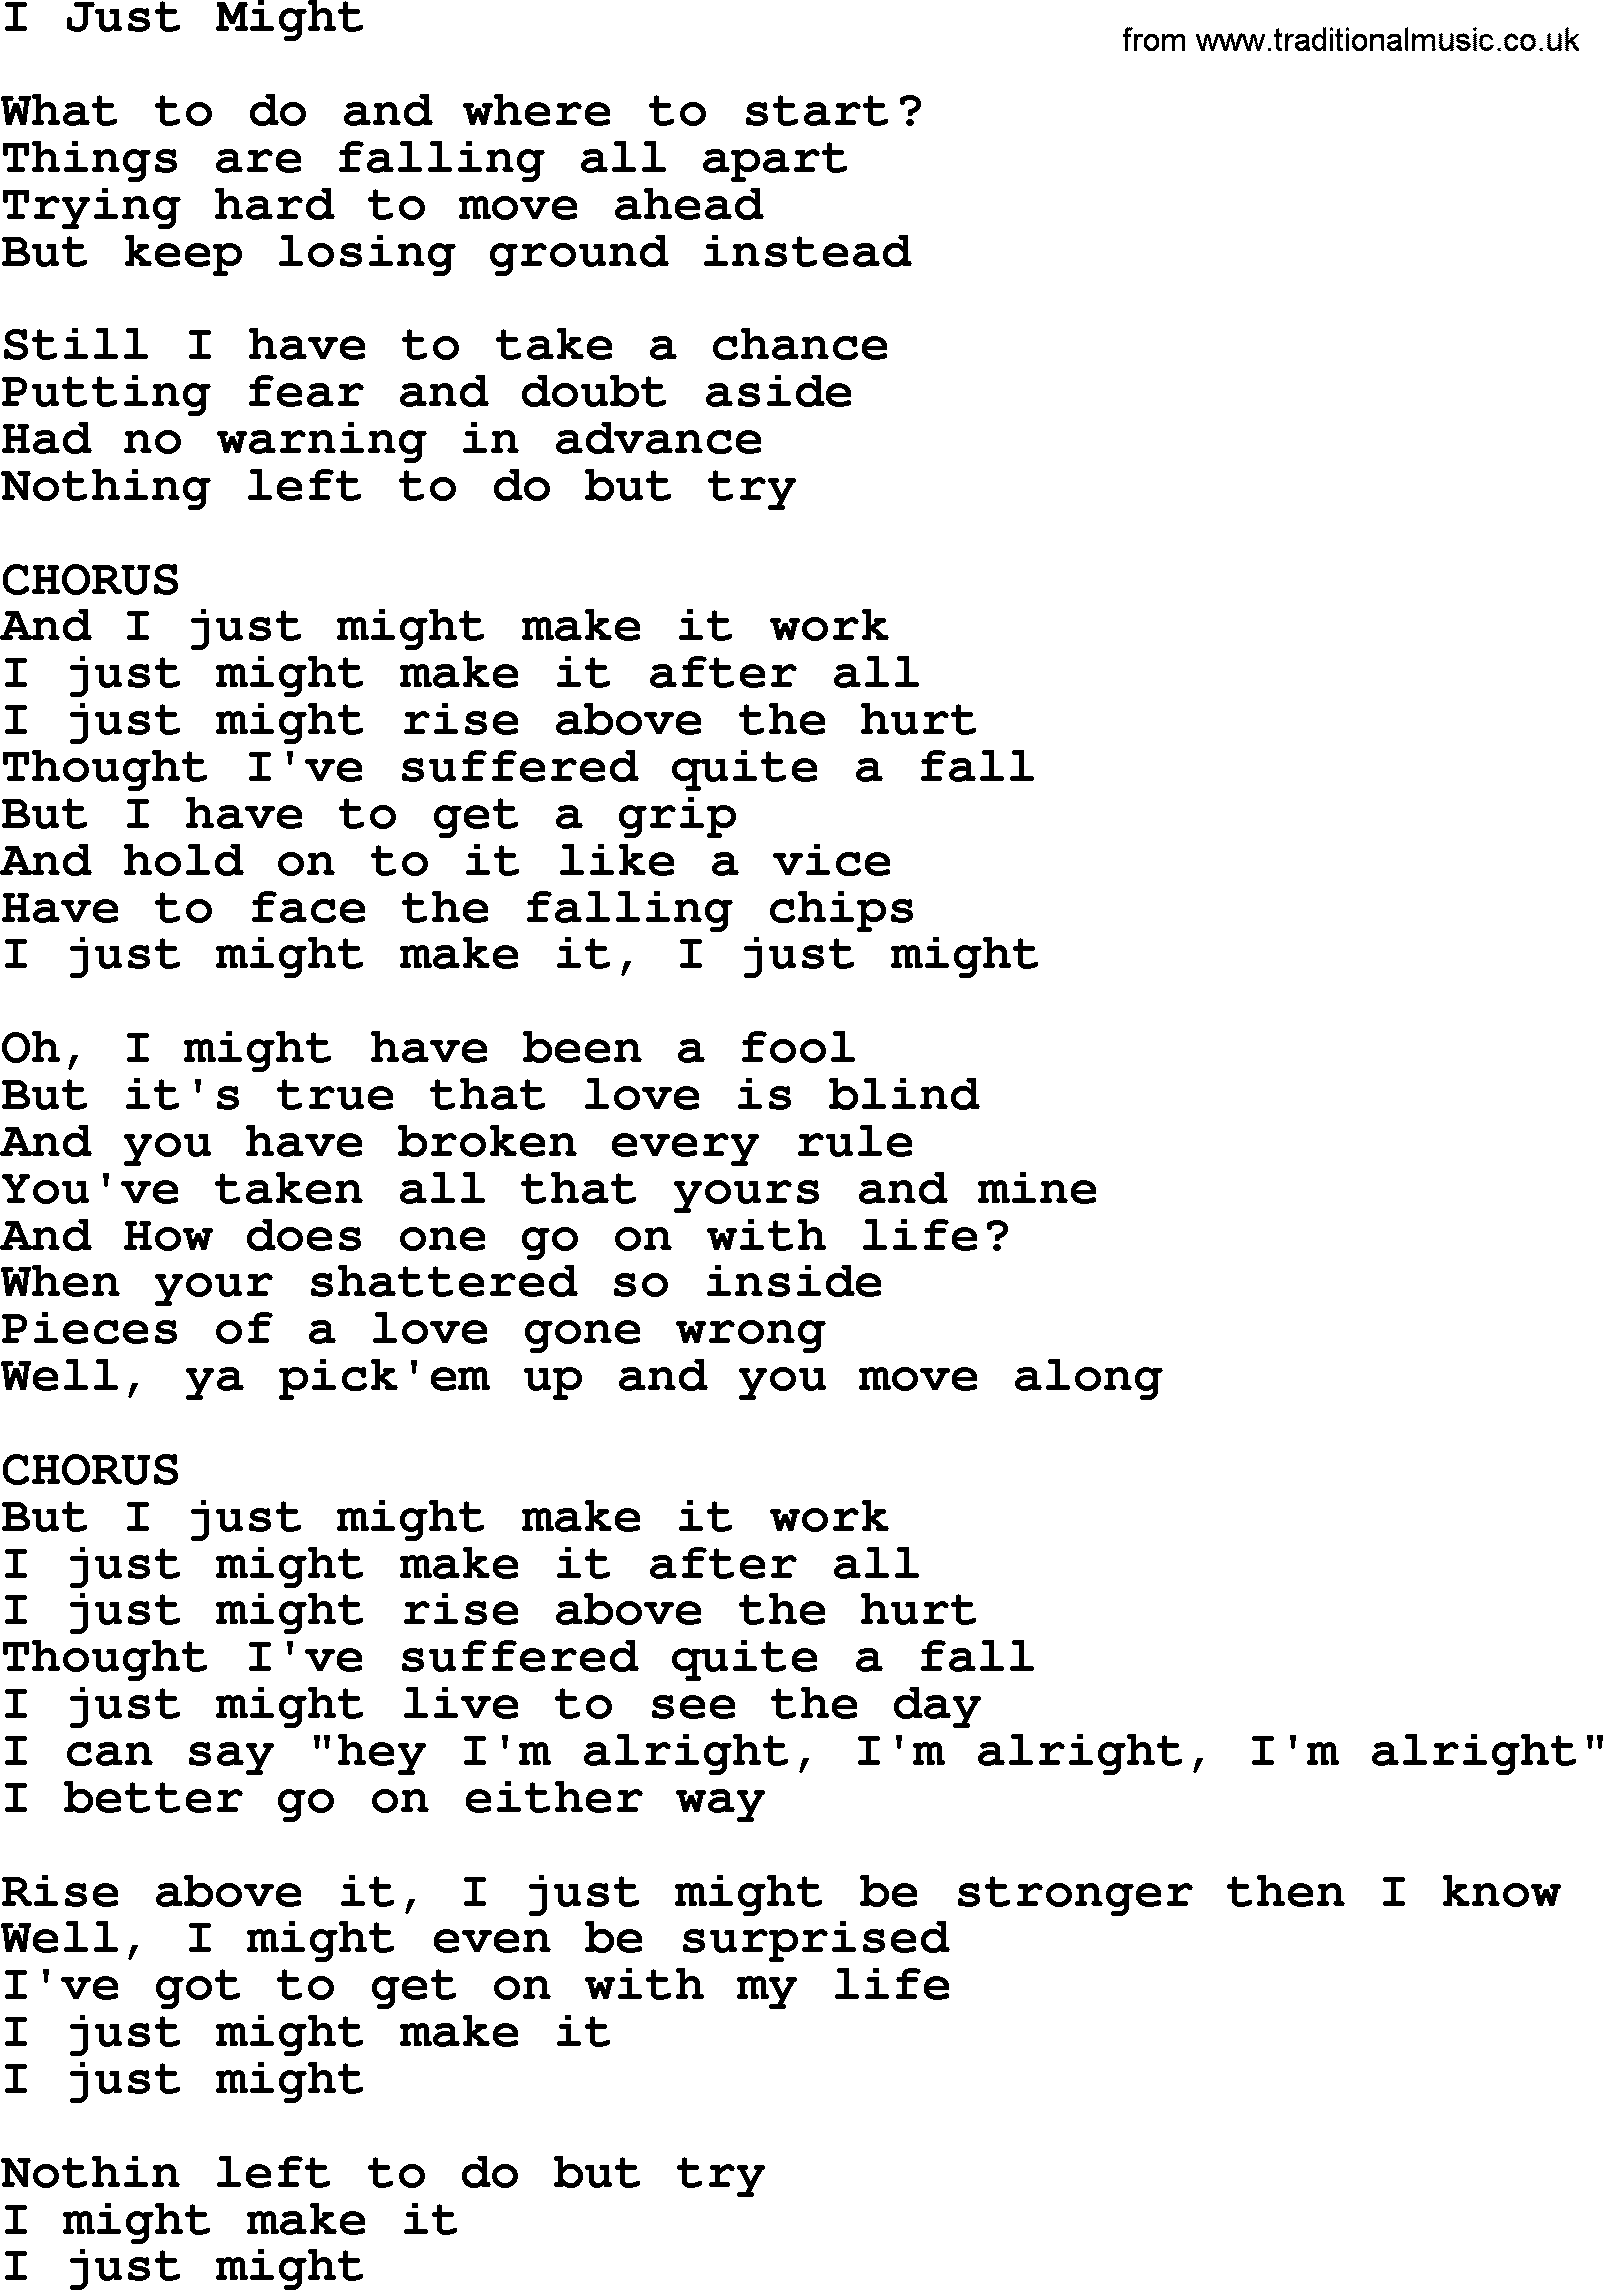 Dolly Parton song I Just Might.txt lyrics